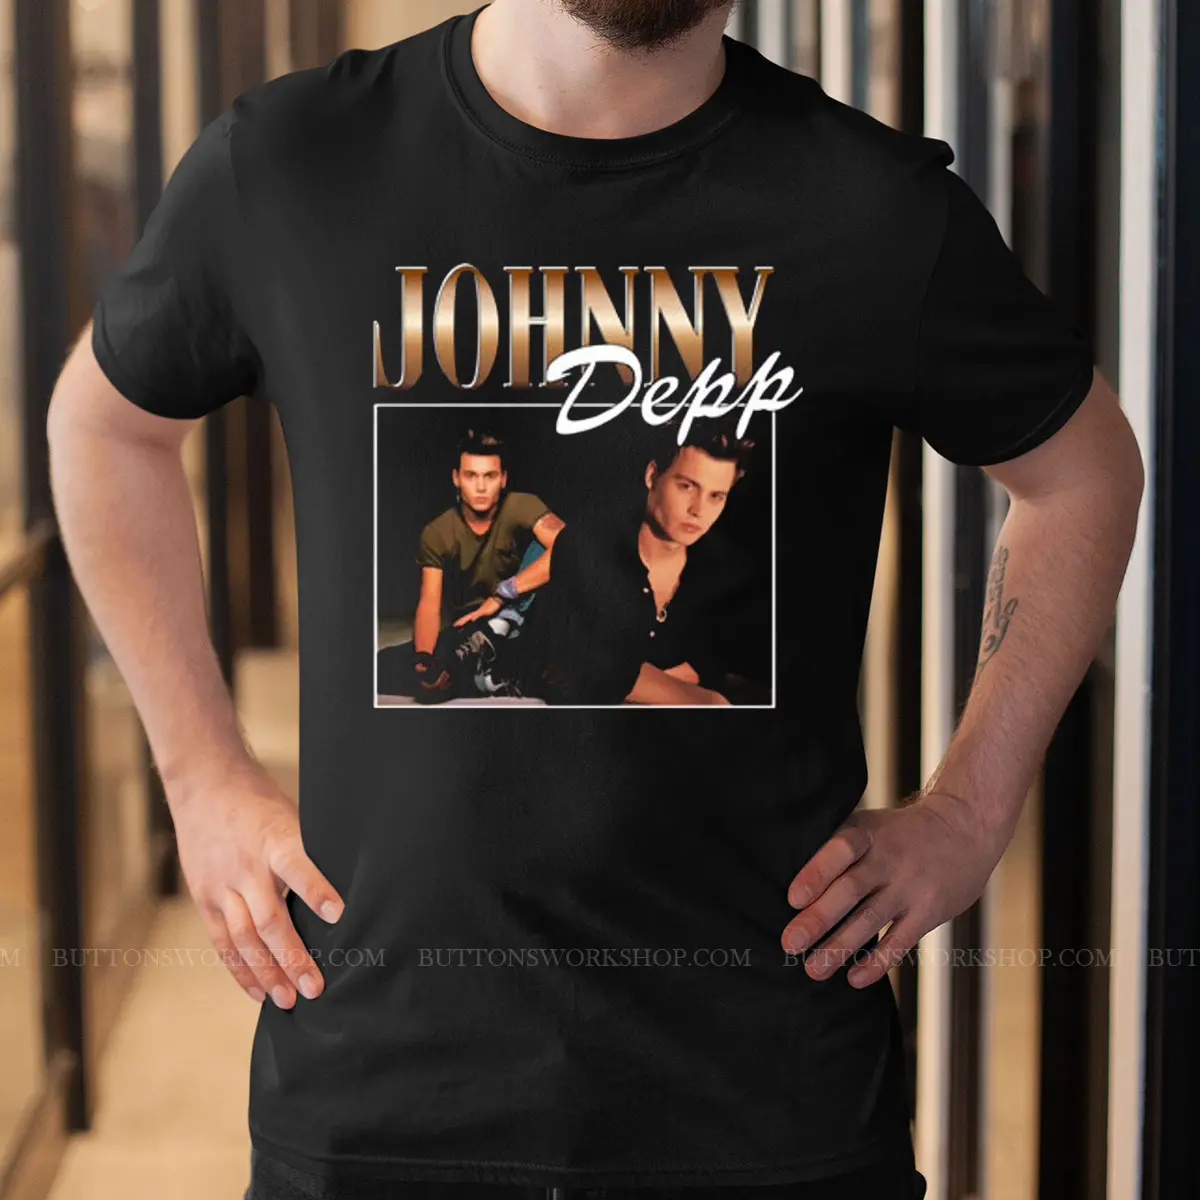 Johnny Depp Shirt Unisex Tshirt